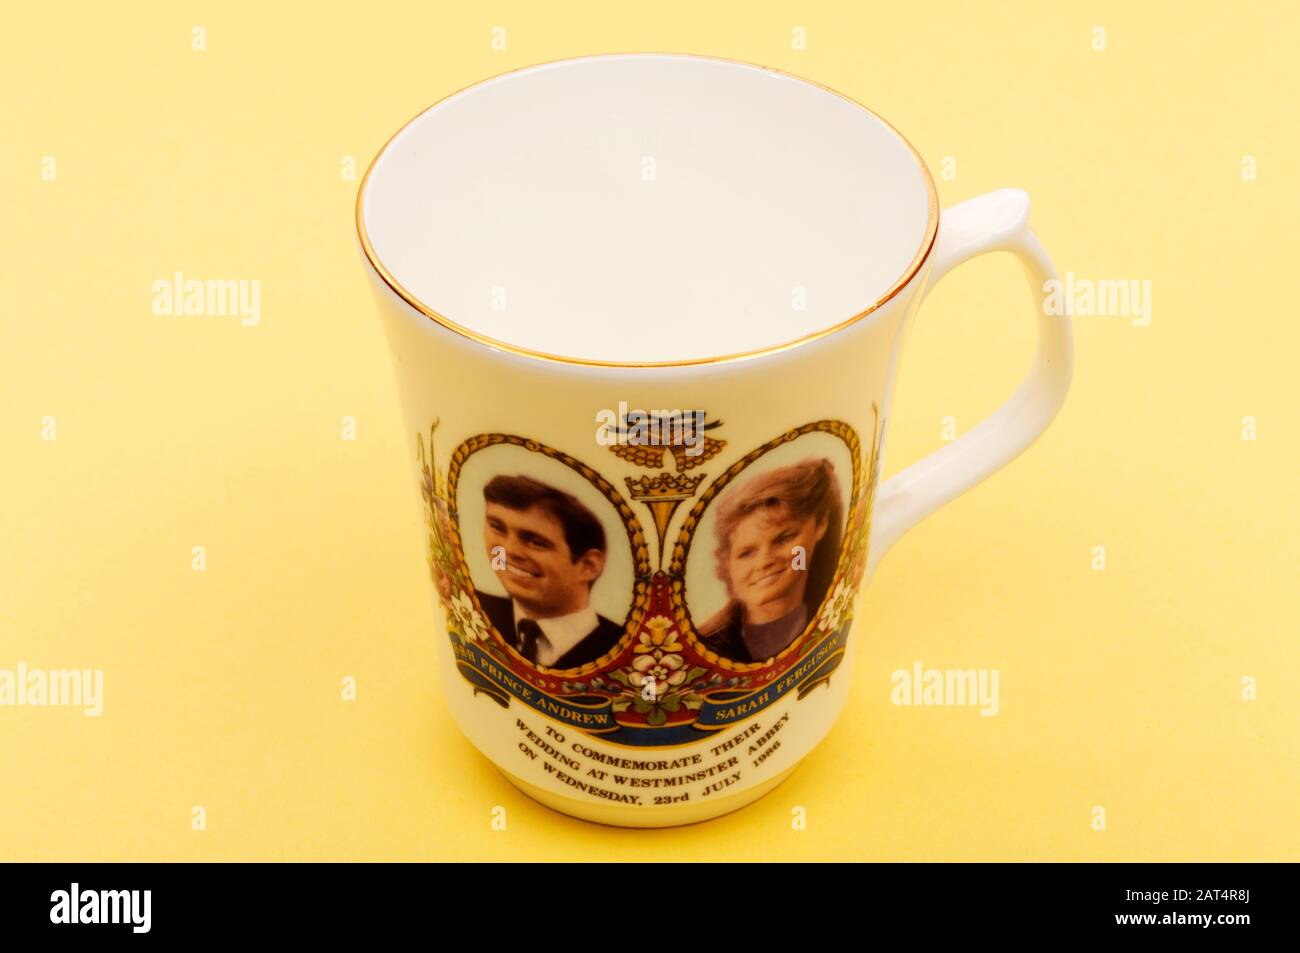 Royal wedding commemorate mug Stock Photo